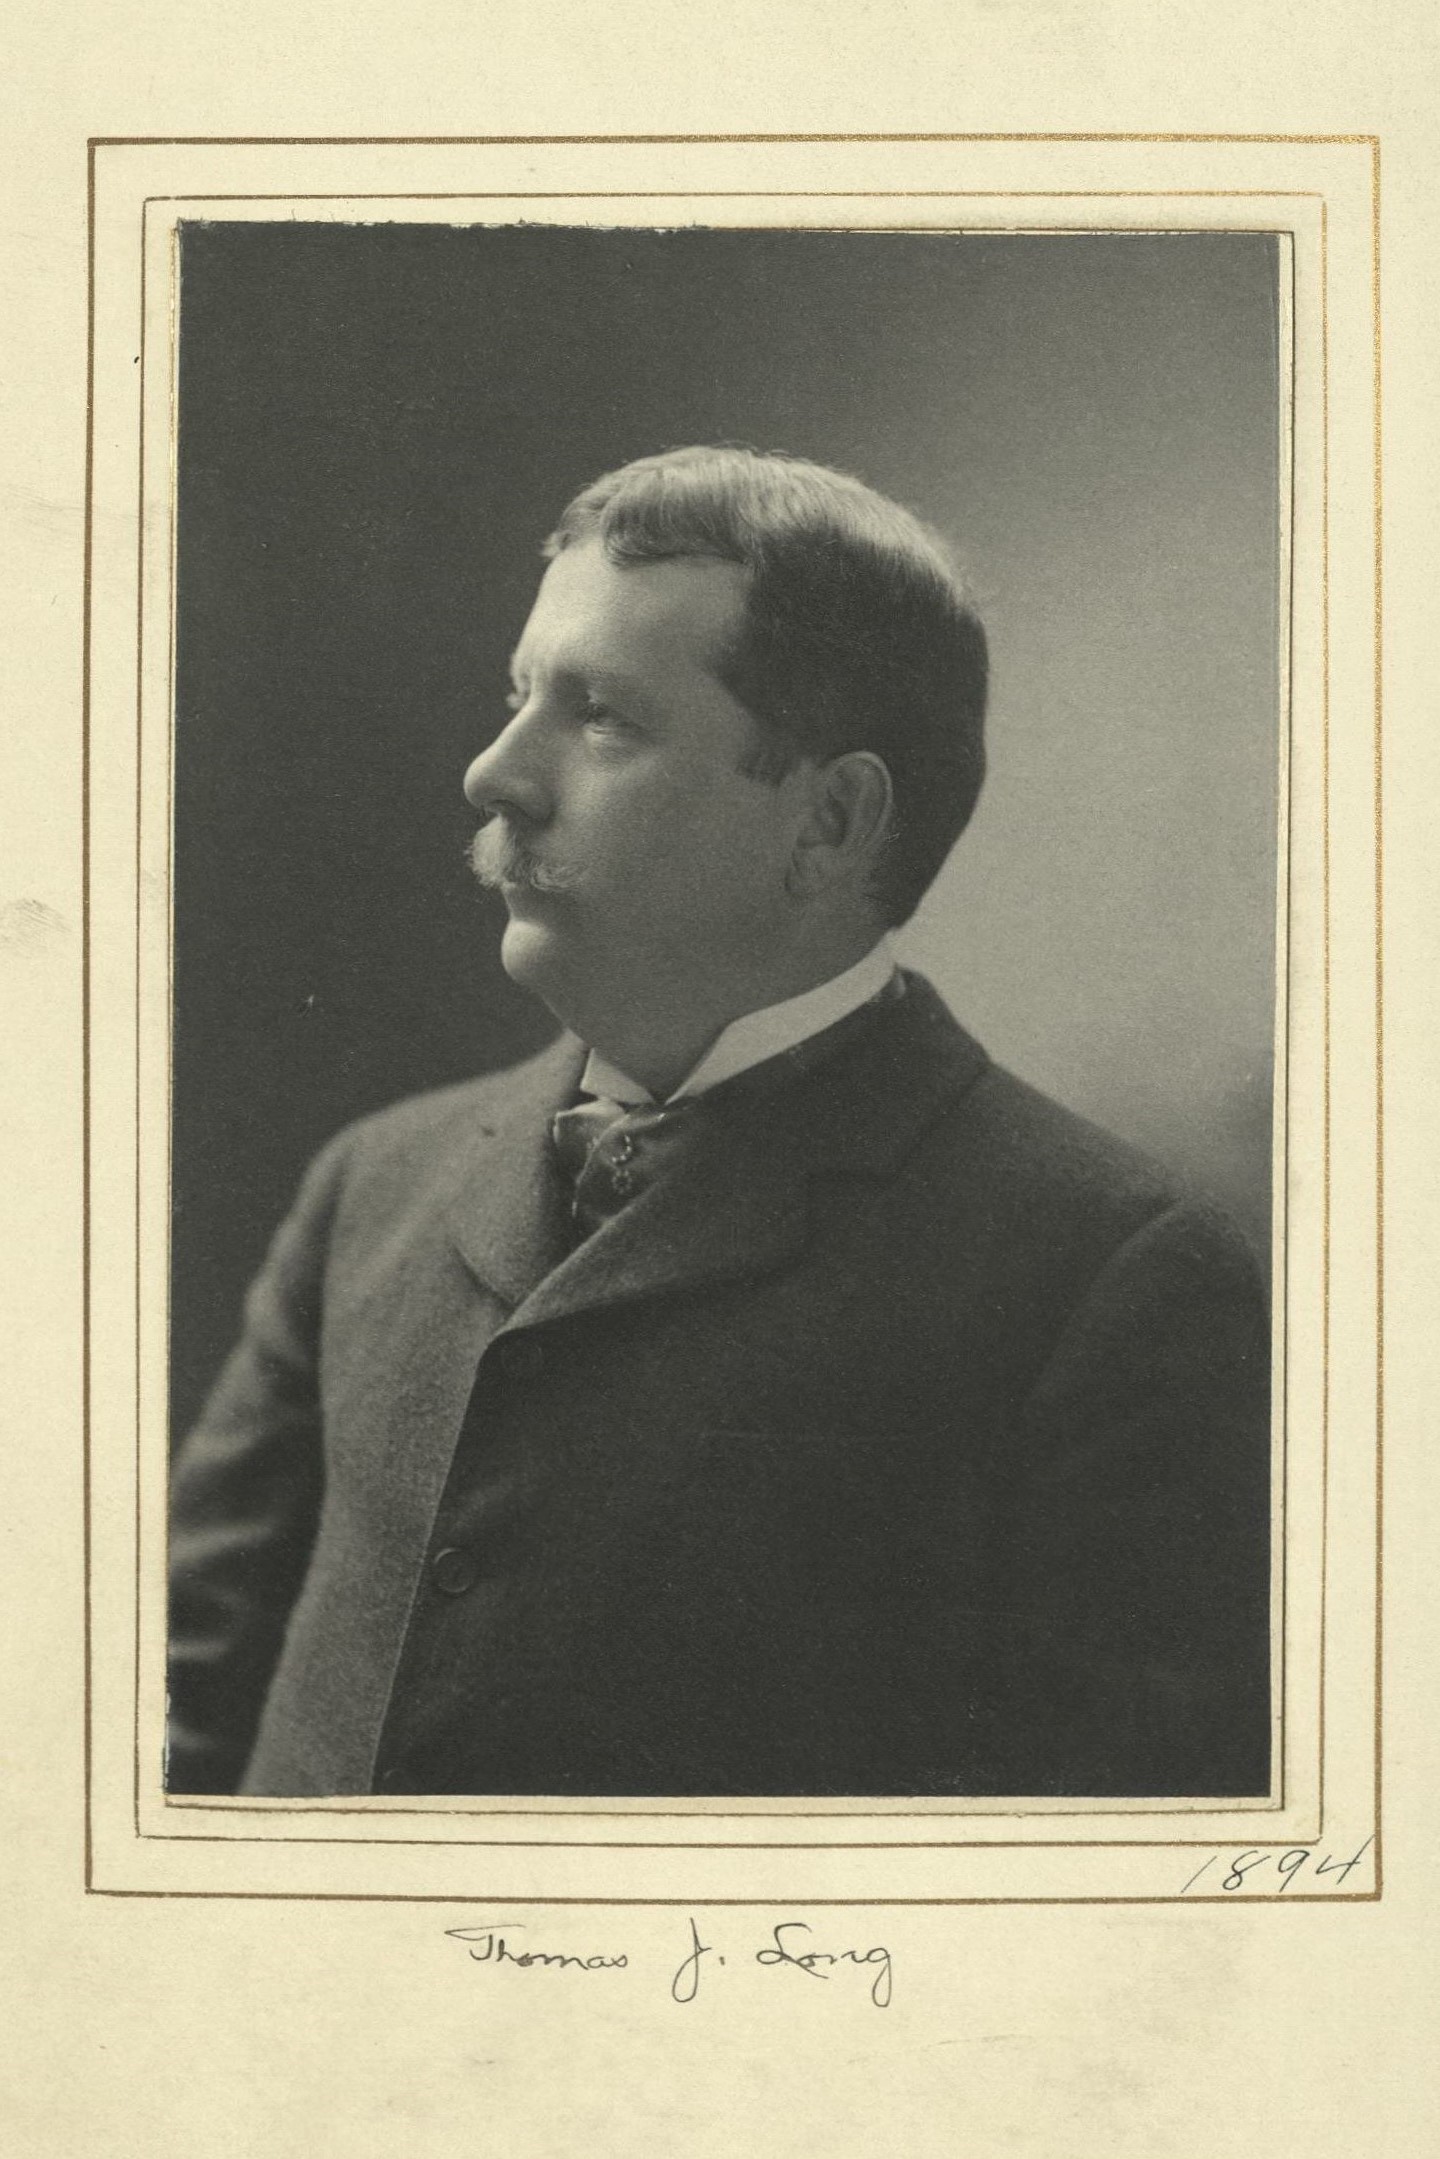 Member portrait of Thomas J. Long